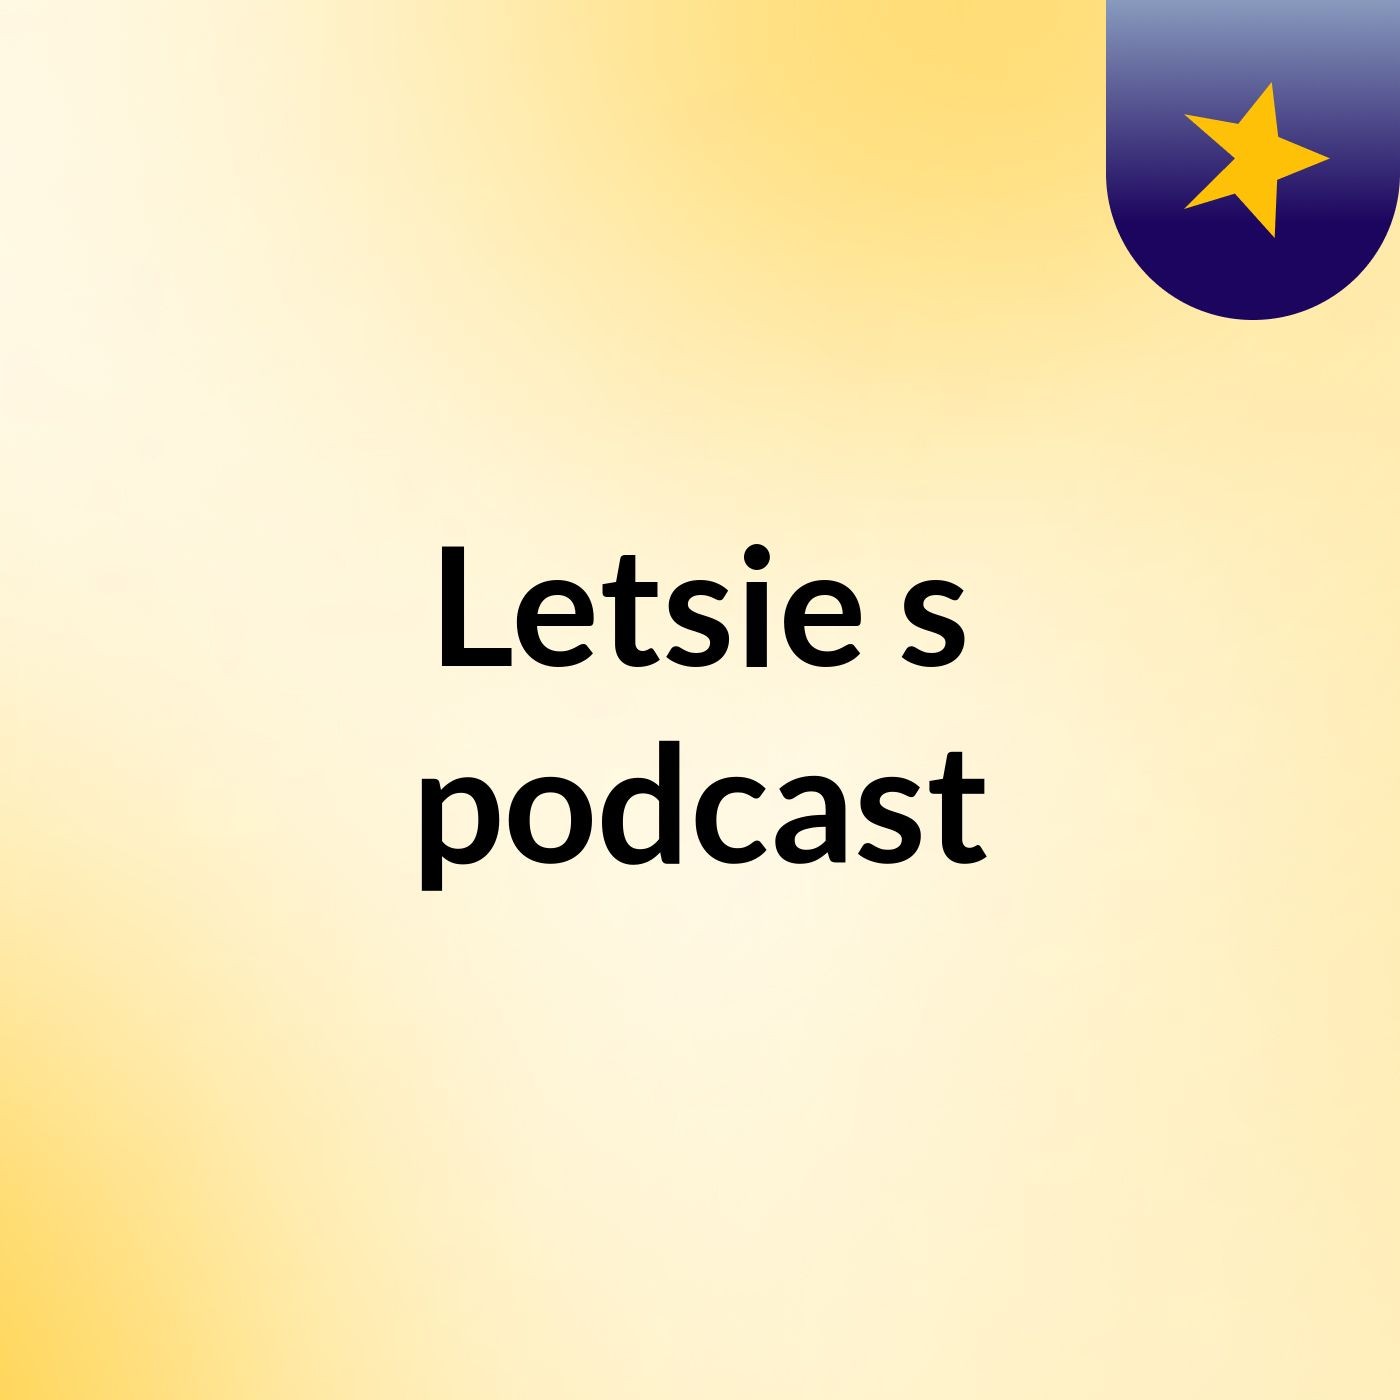 Letsie's podcast